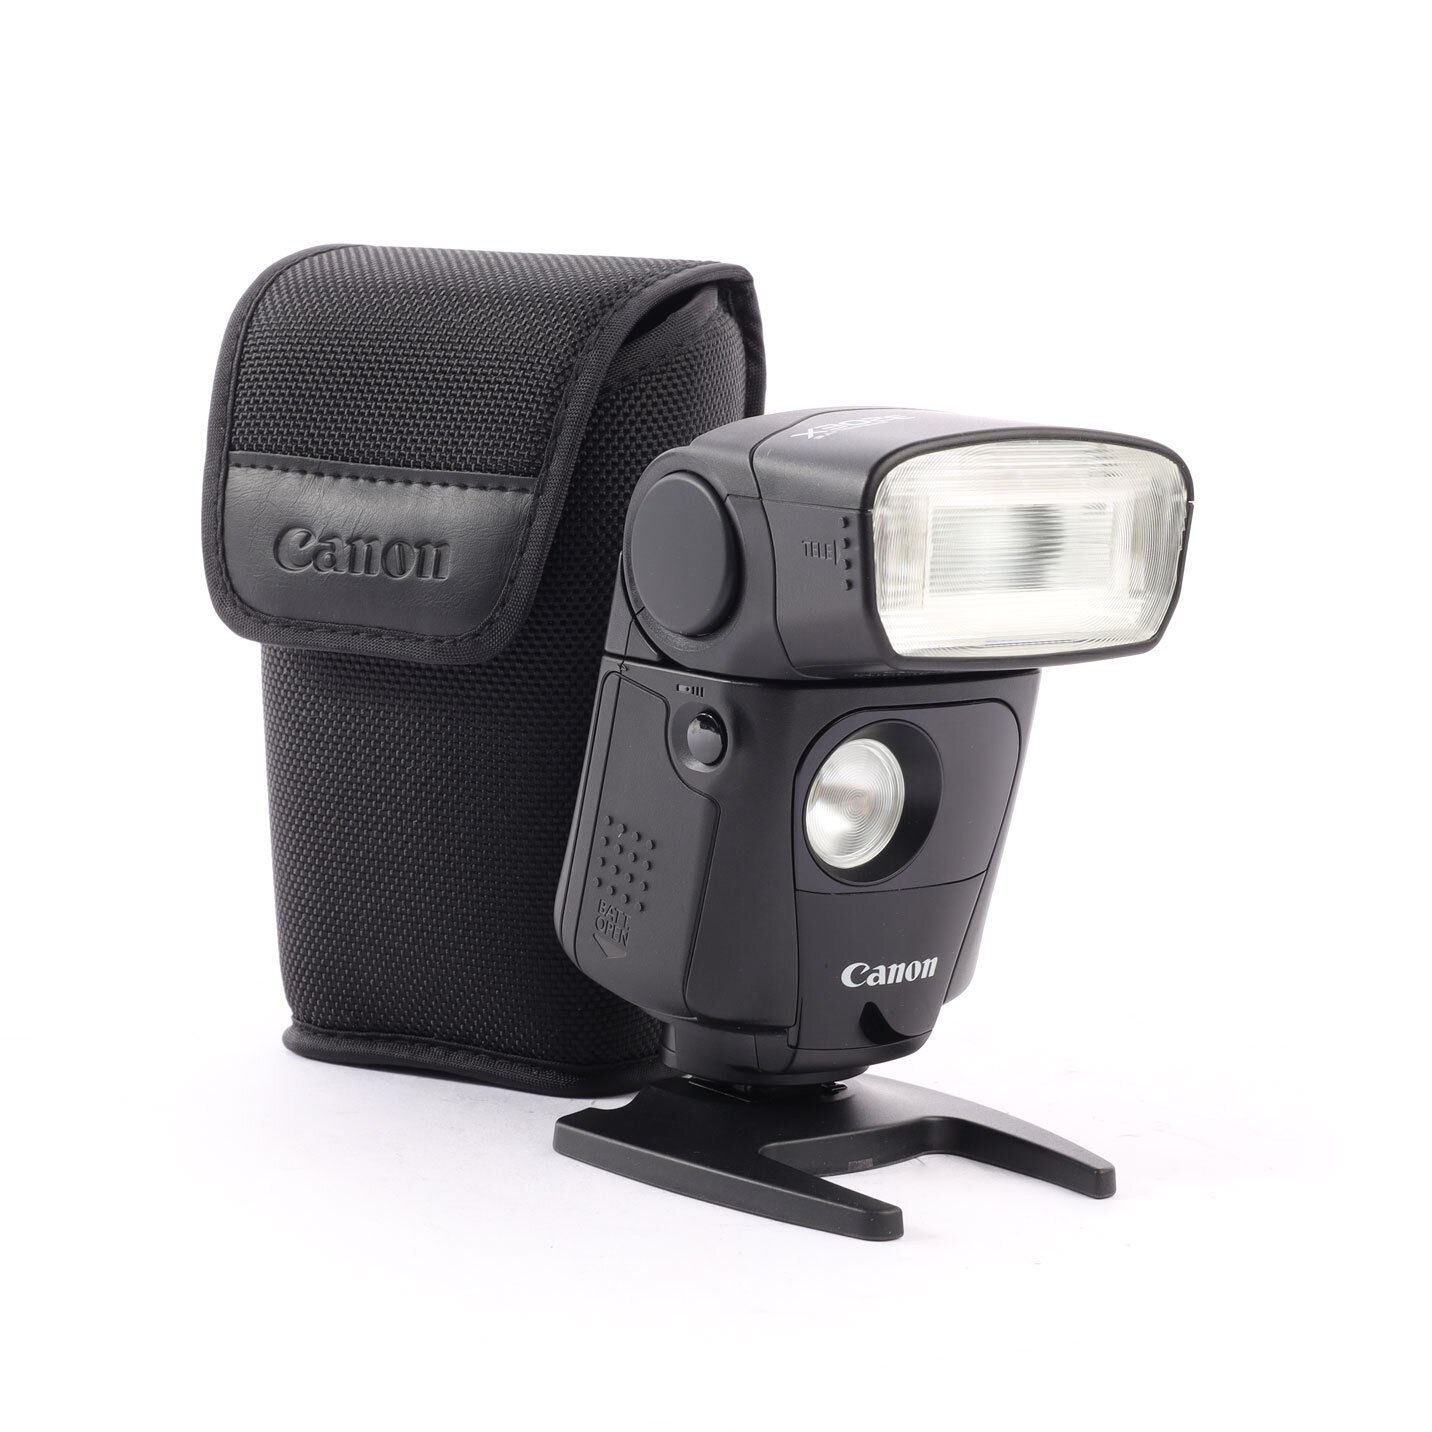 Canon Speedlight 320EX